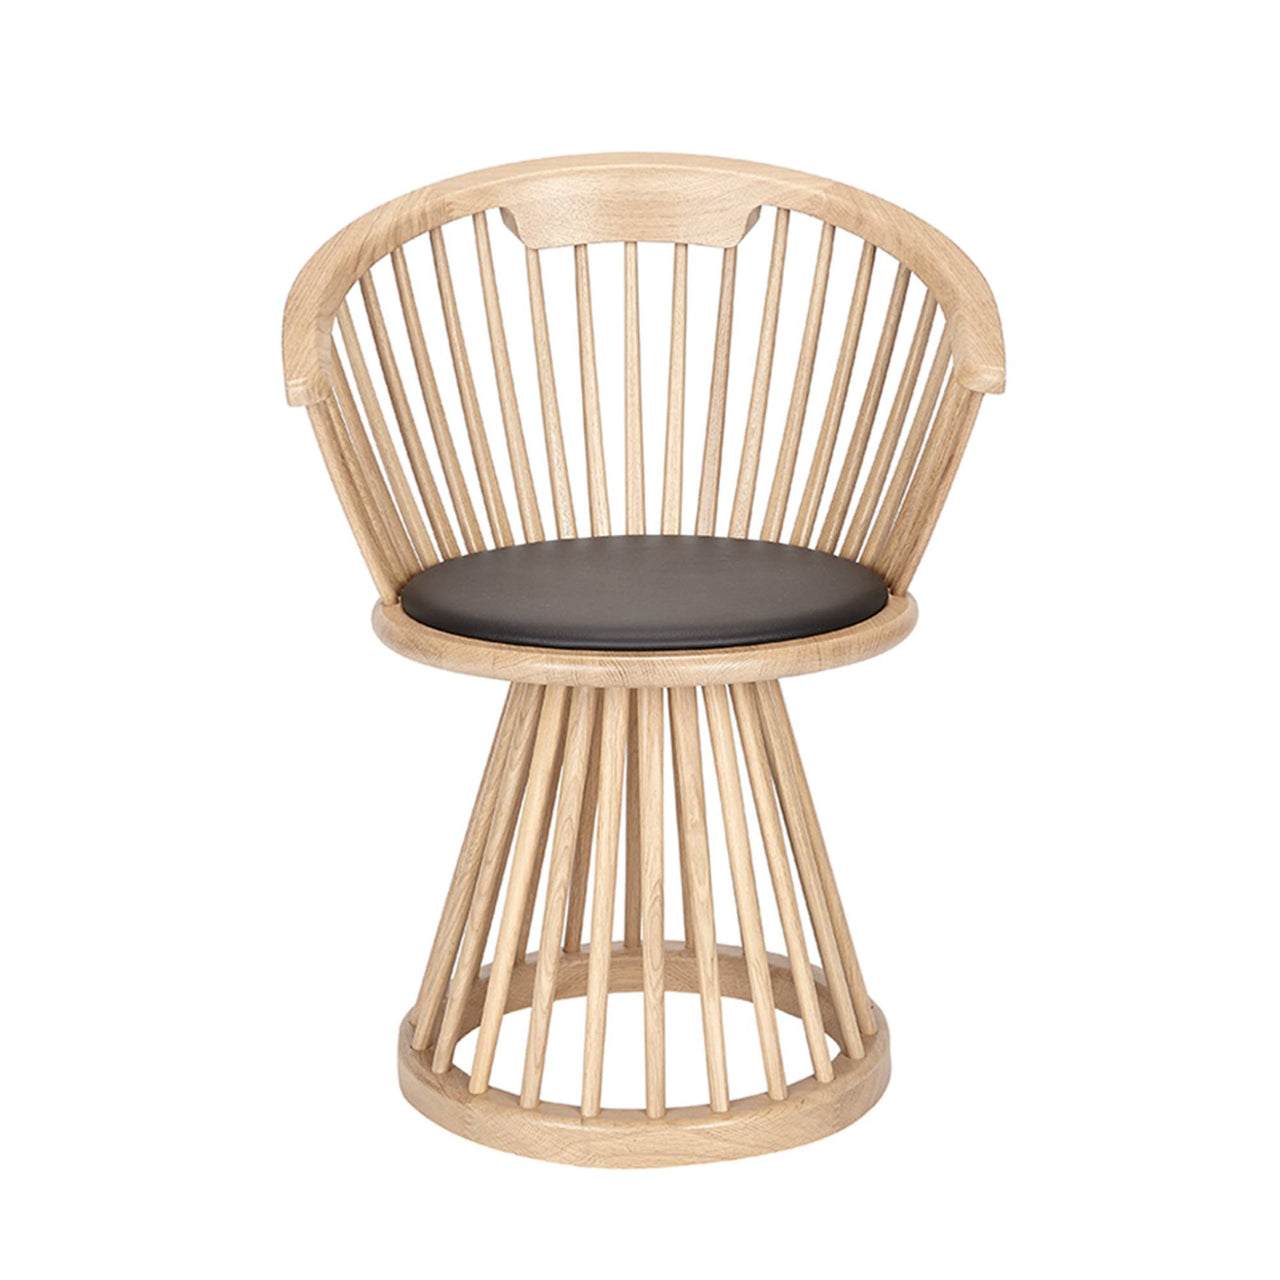 Fan Dining Chair: Natural Oak